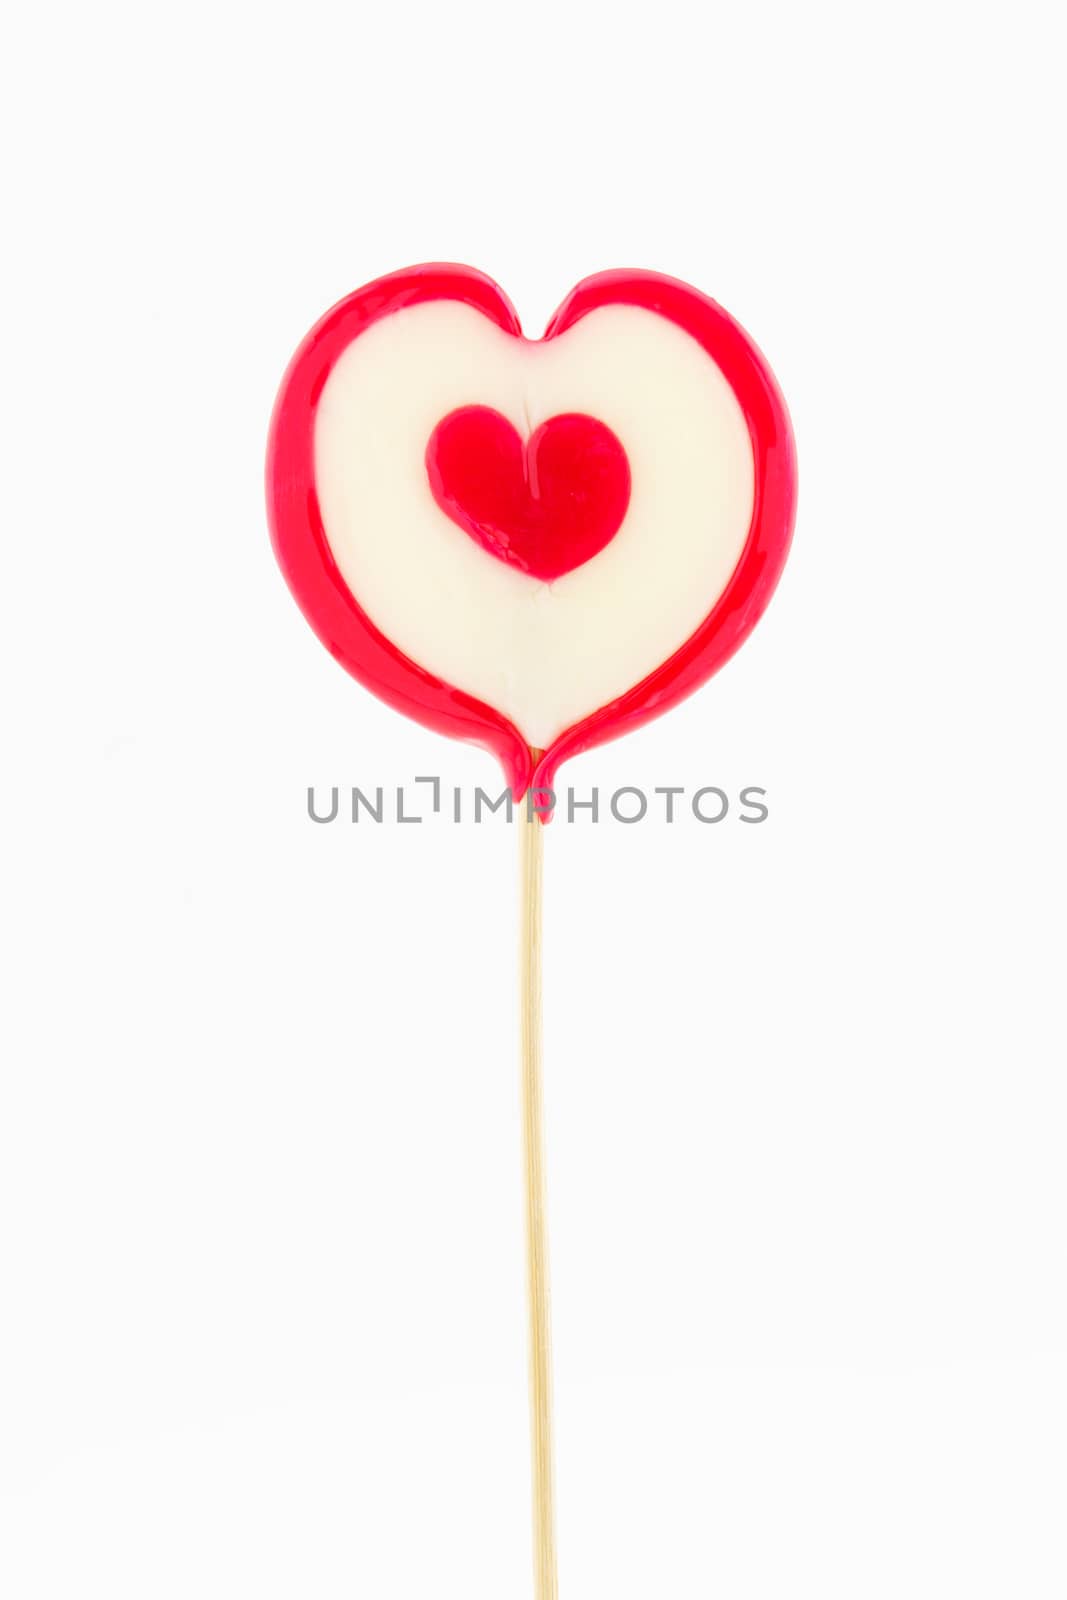 heart shaped lollipop  on white background by vitawin